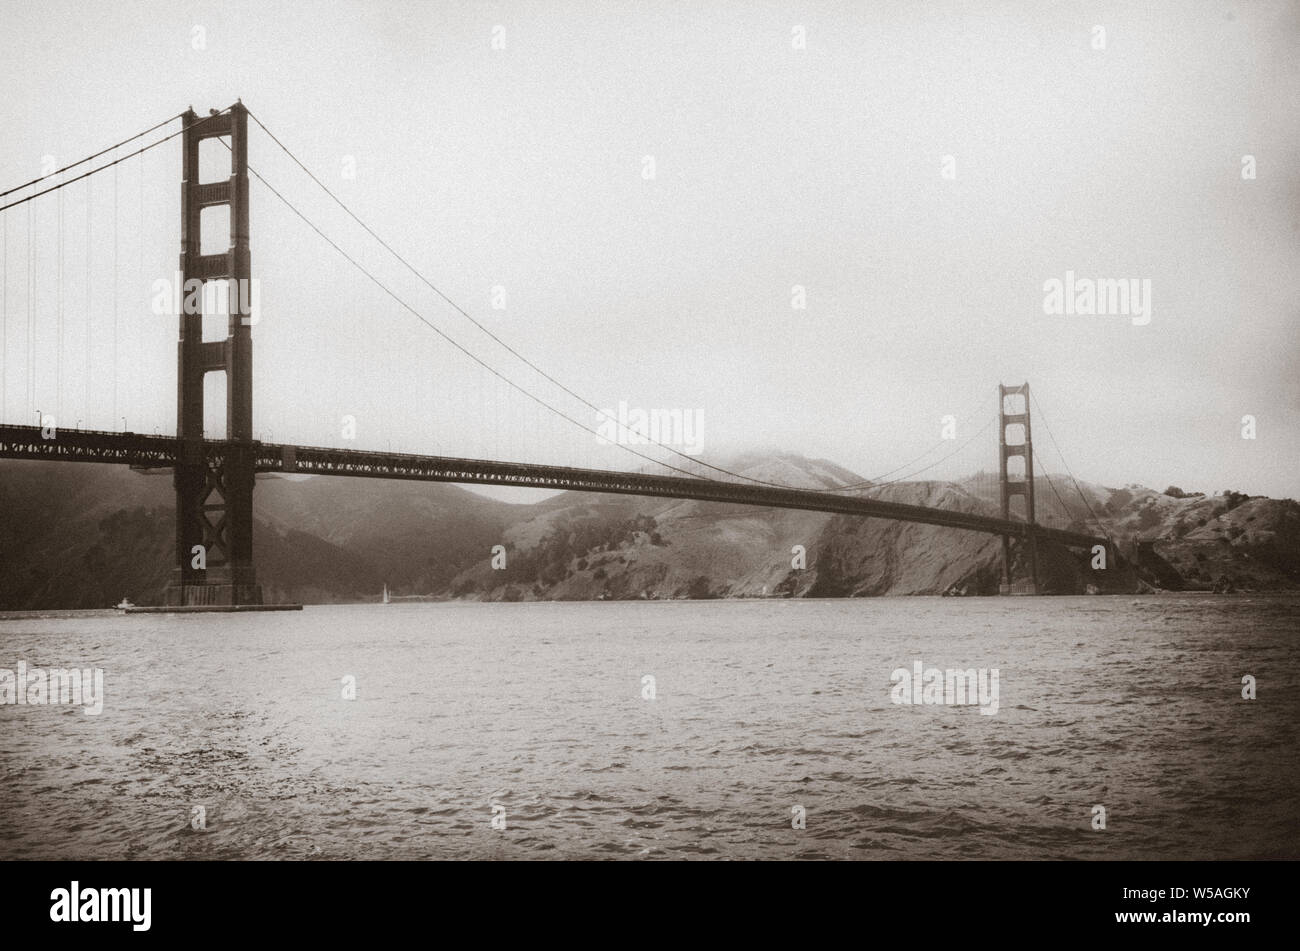 San Francisco Golden Gate Bridge, California Stock Photo